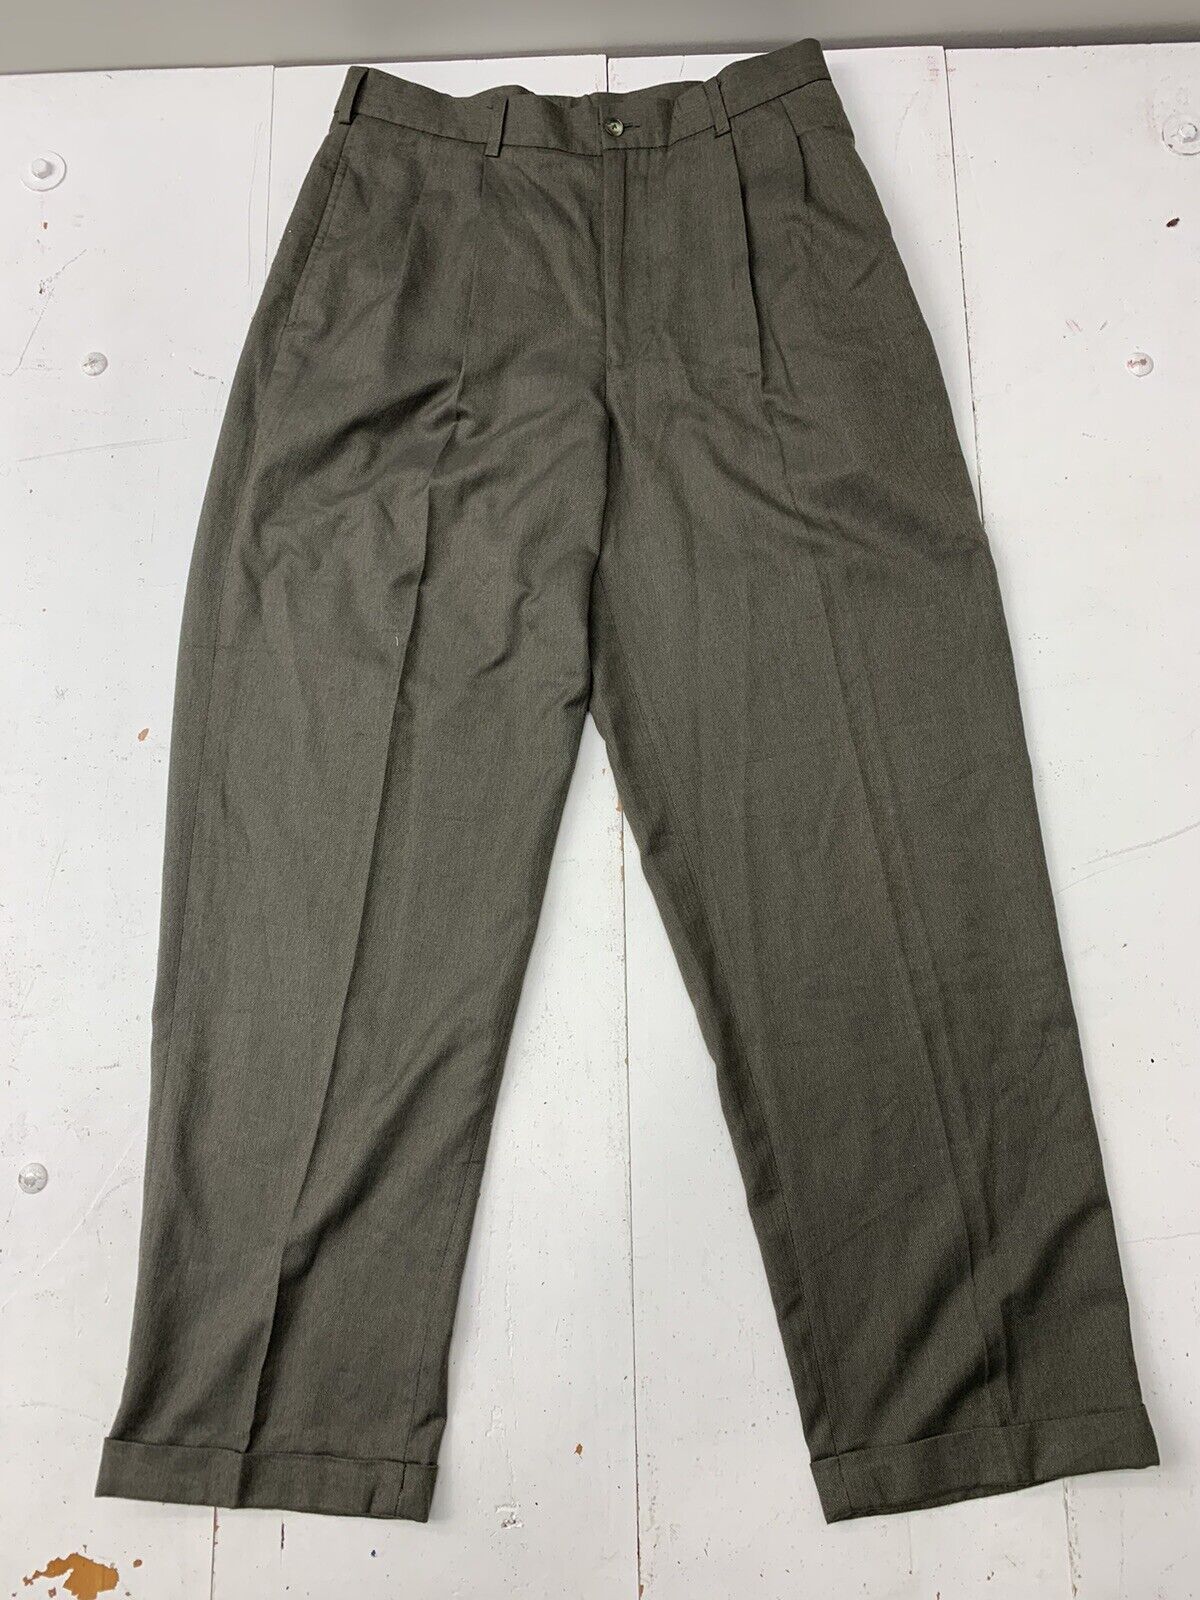 Dockers Mens Classic Fit Brown Dress Pants Size 36/29 - beyond exchange